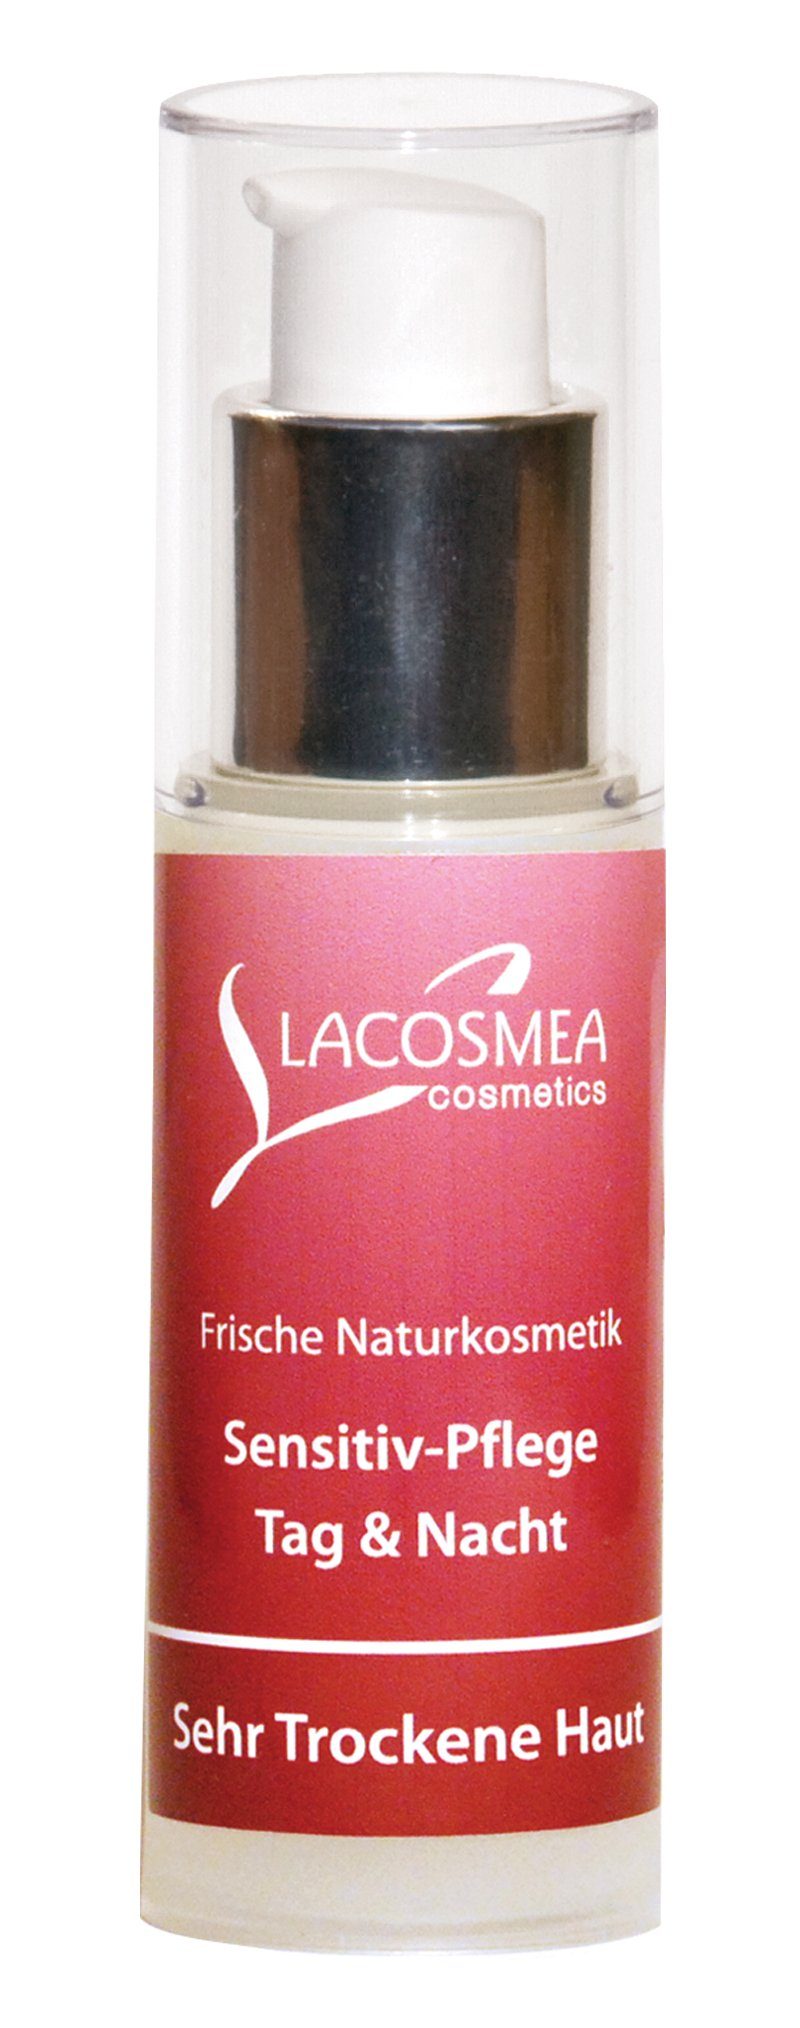 Lacosmea Cosmetics Gesichtspflege Sensitivpflege für sehr trockene Haut